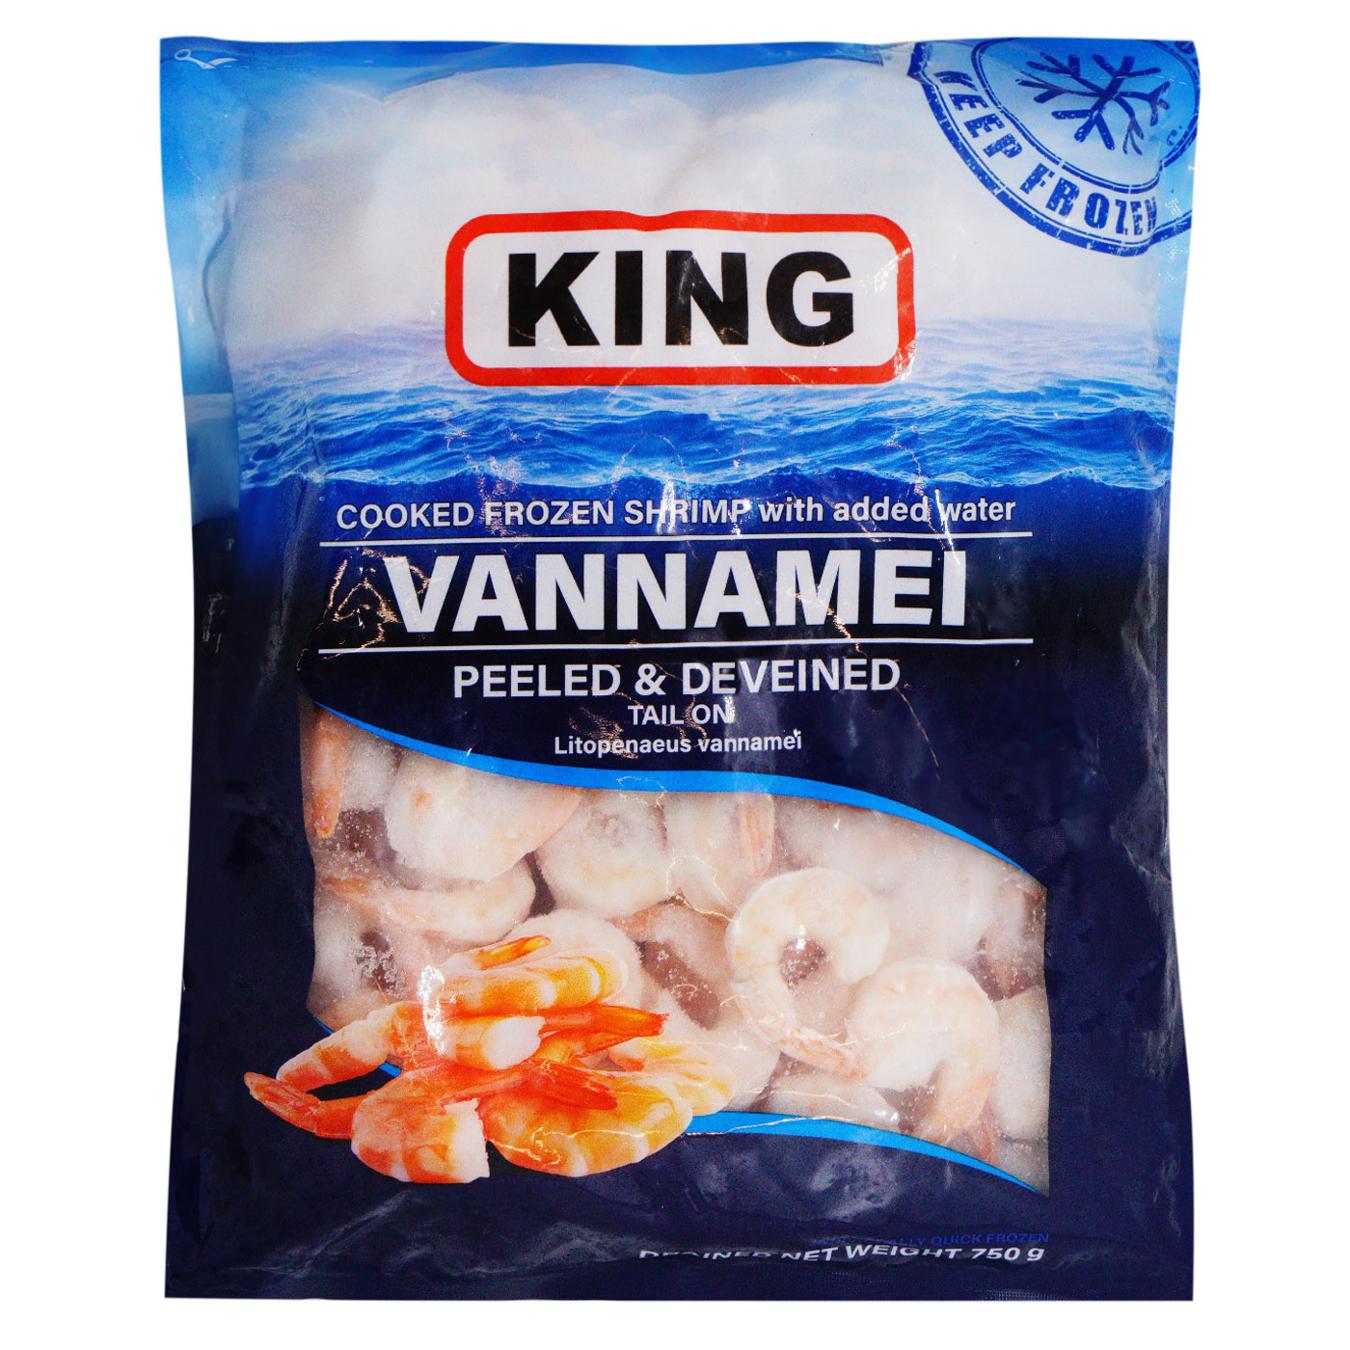 Peeled King shrimp with tail in glaze v/m 41/50 25% 750g